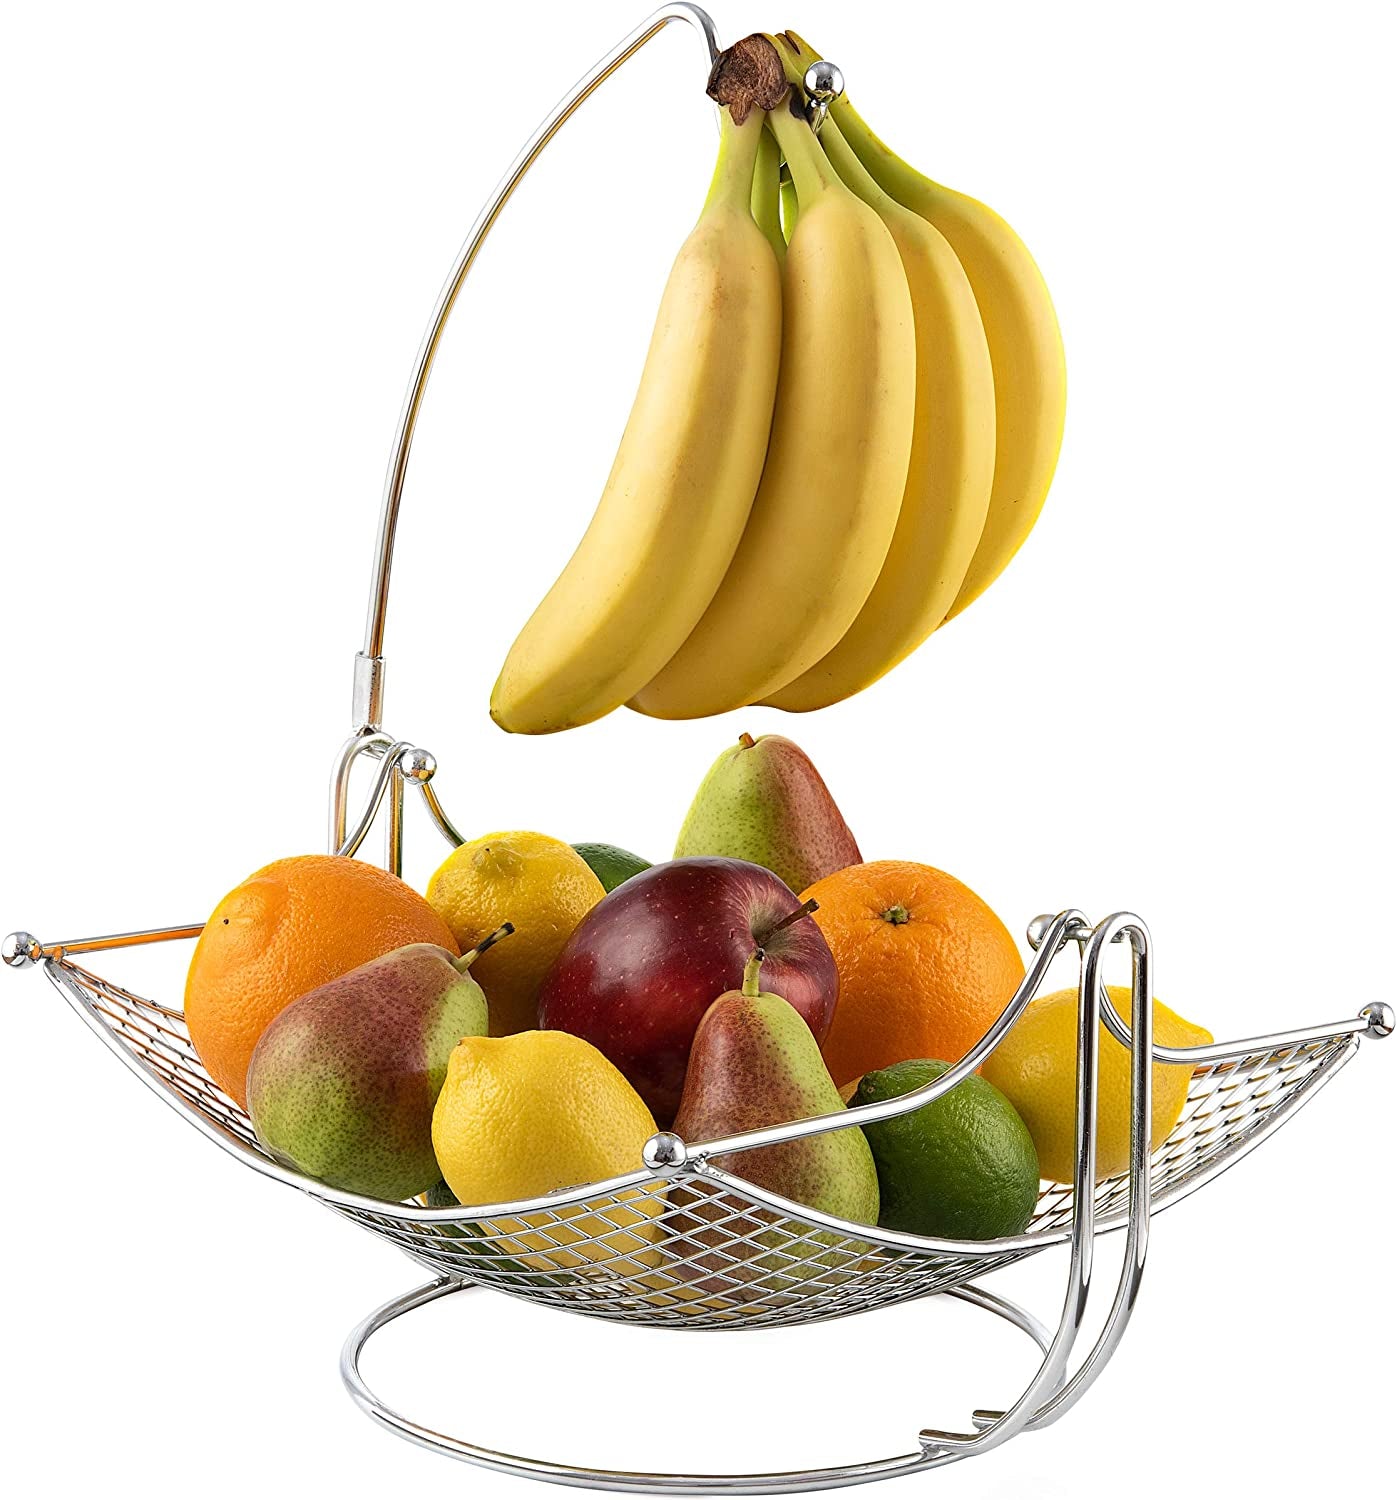 Fruit Bowl with Banana Hanger - Fruit Basket with Detachable Banana Holder - Black Chrome or Bronze Color Options (Chrome)